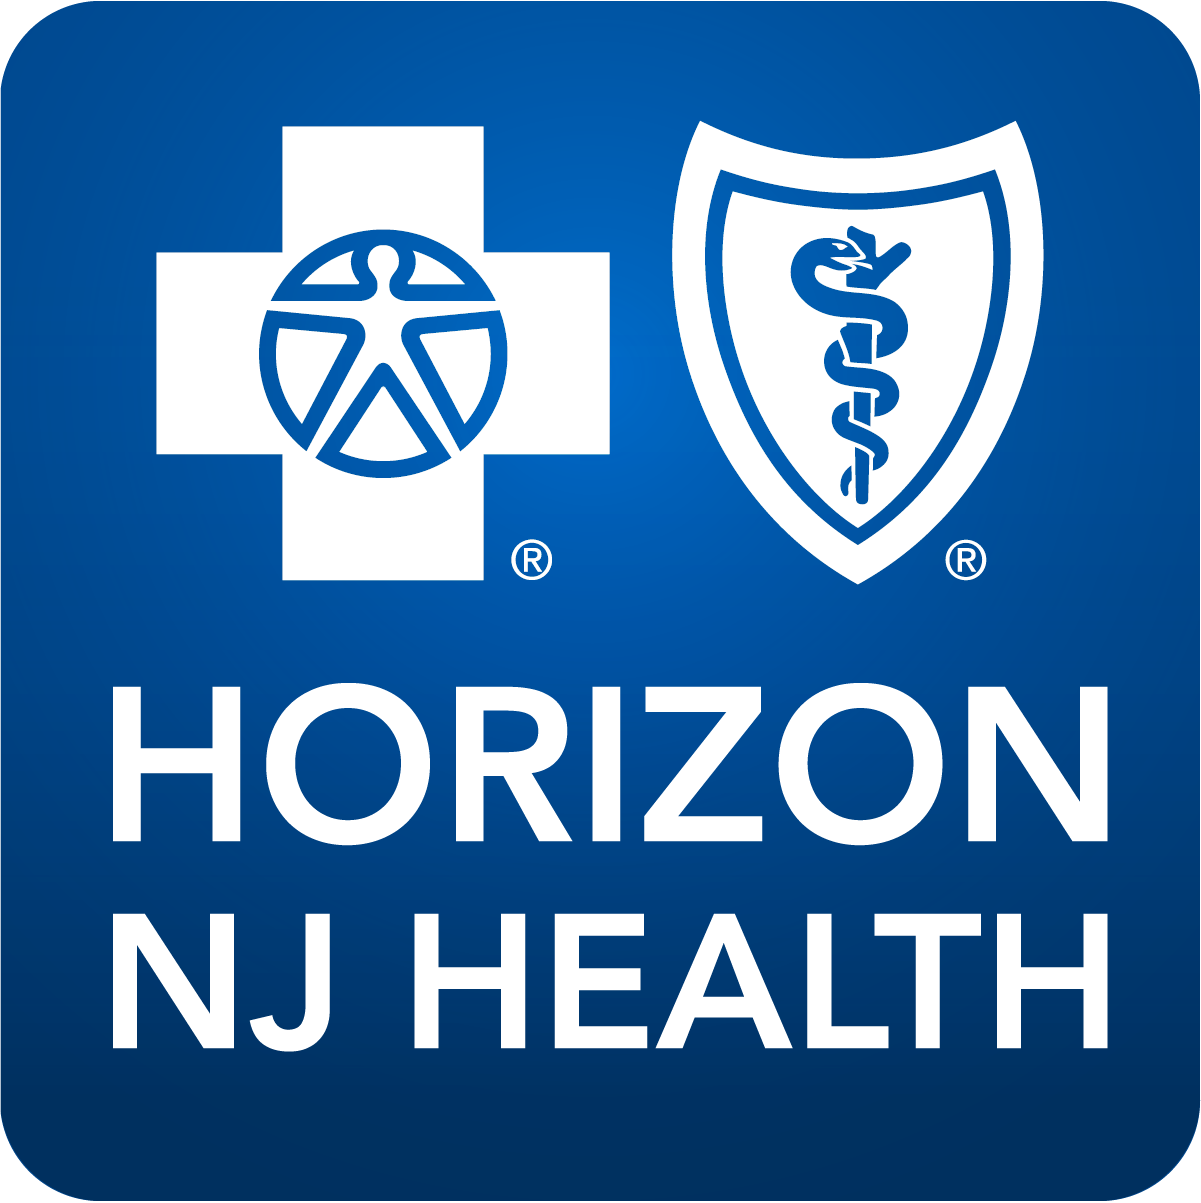 Horizon Nj Health Medical Transportation Transport Informations Lane